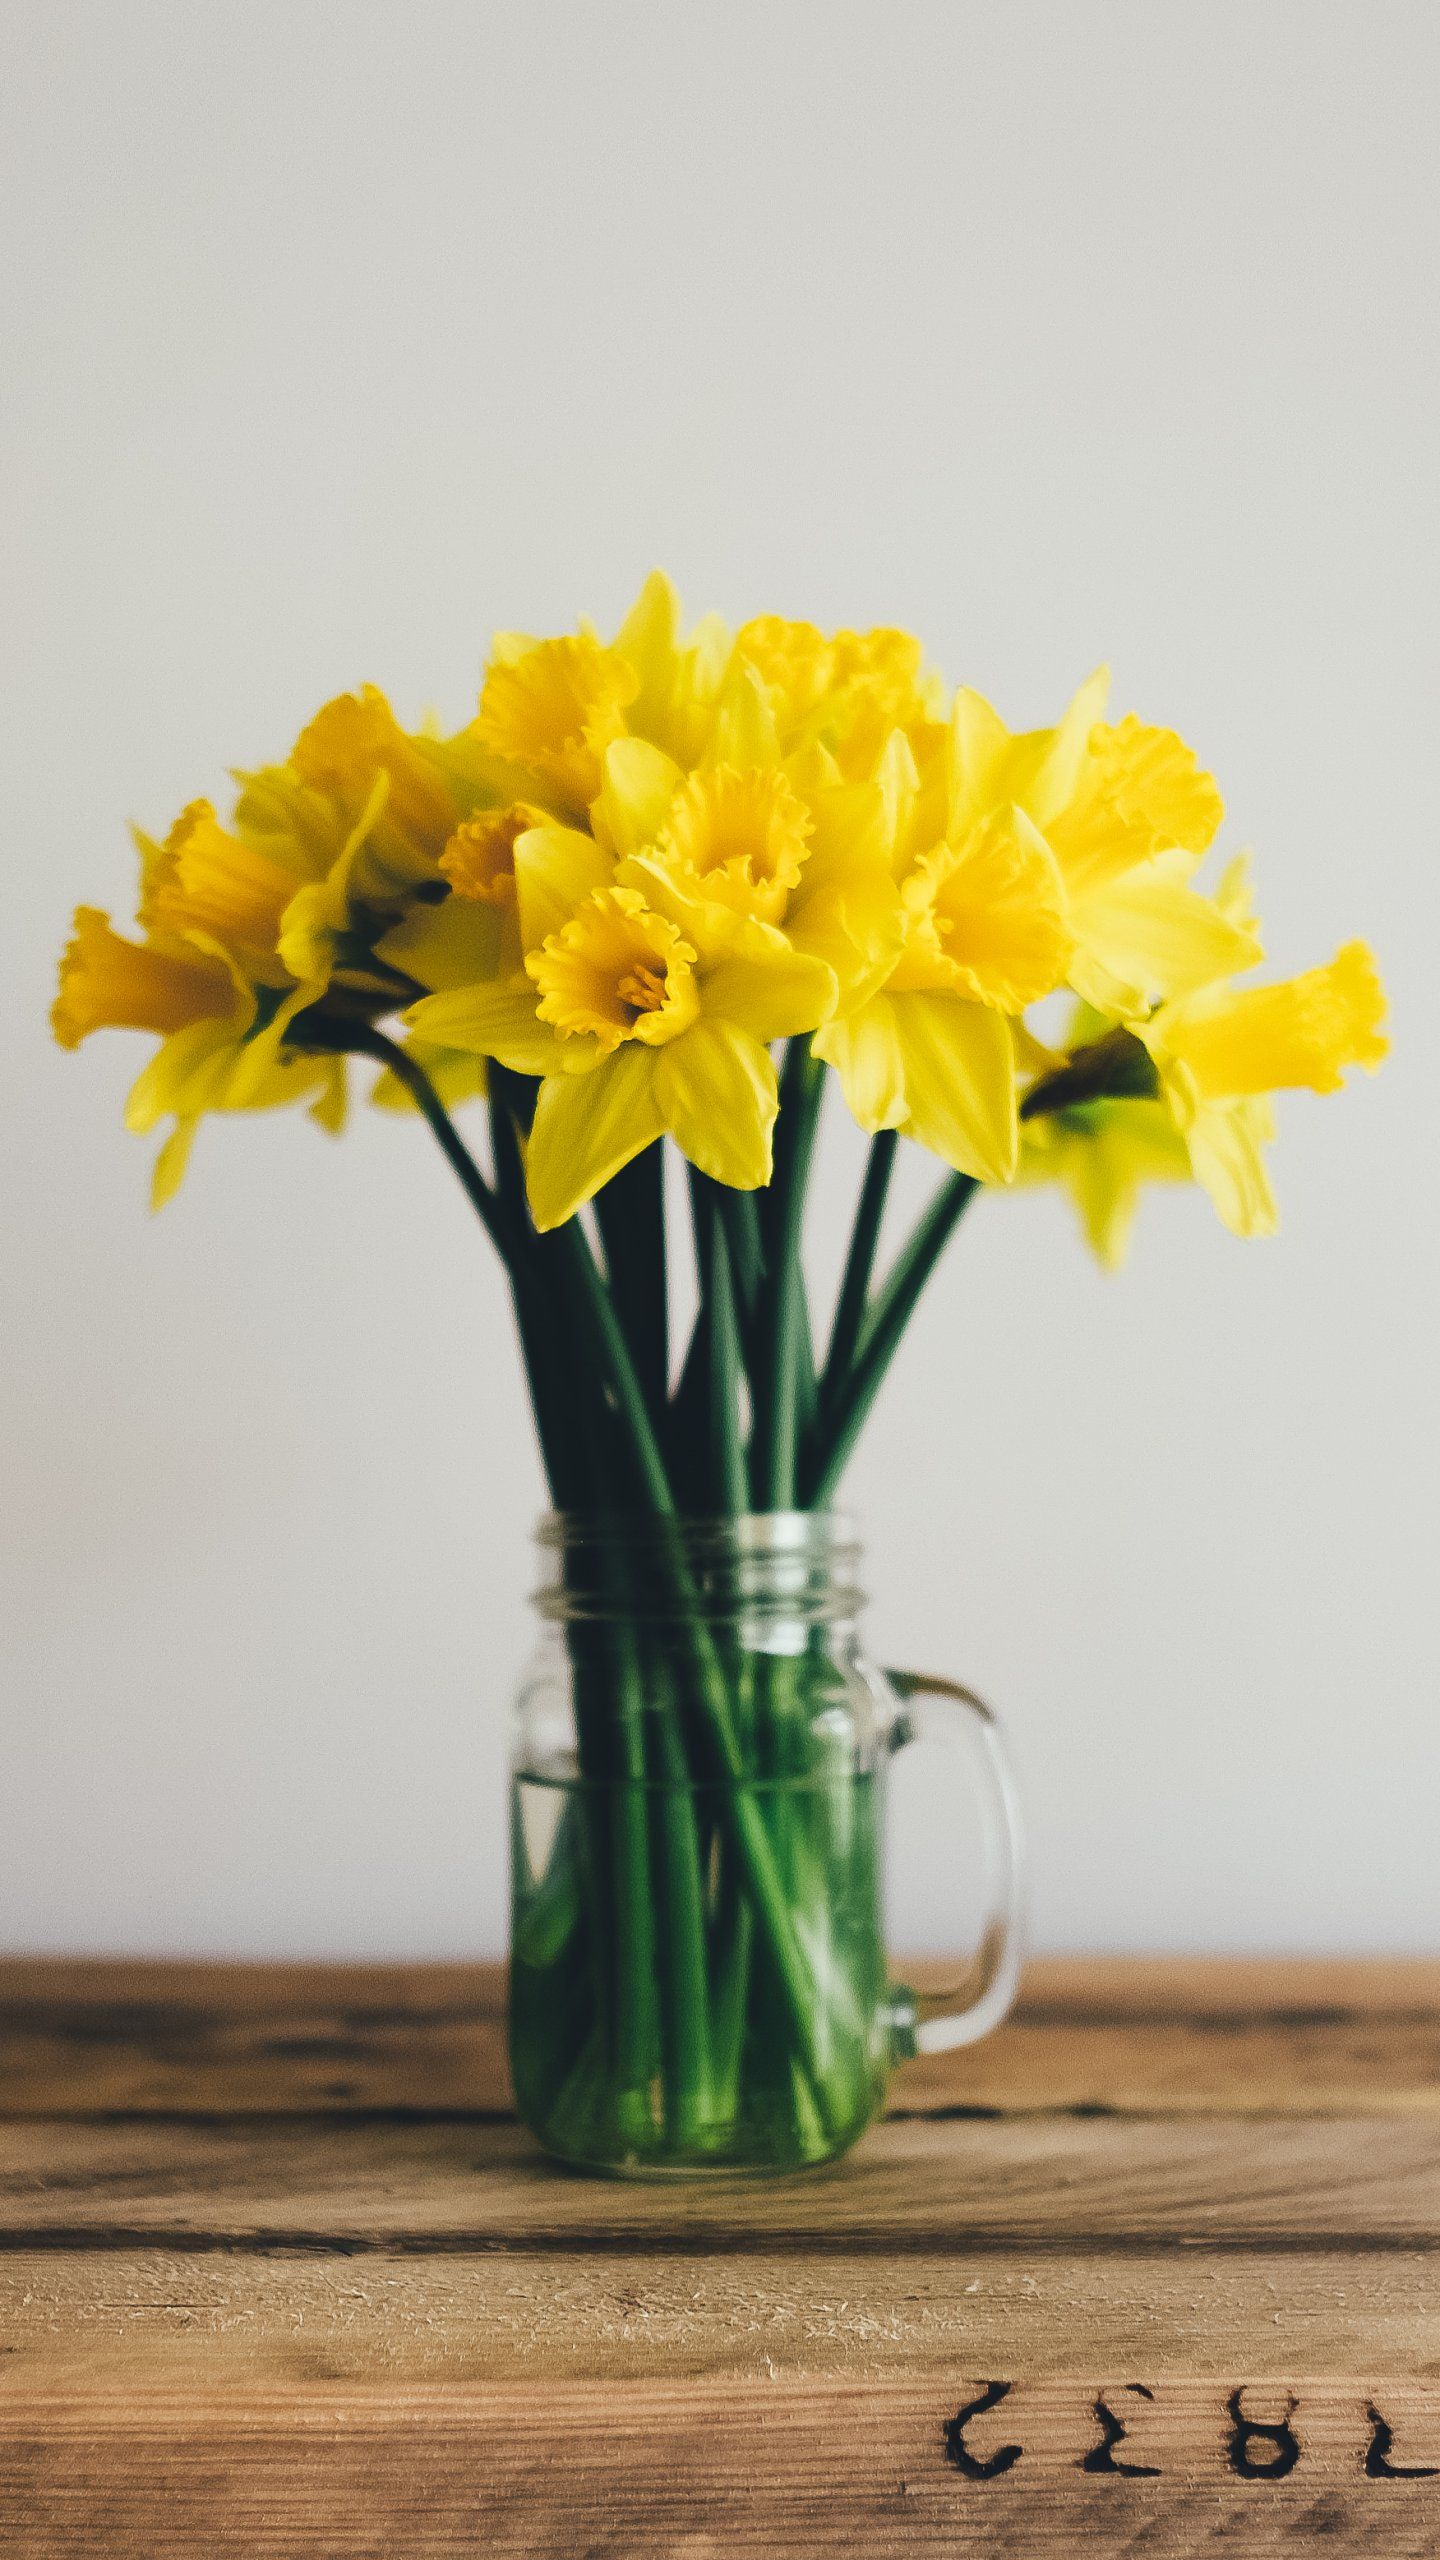 Wallpaper flowers nature spring daffodils images for desktop section  цветы  download